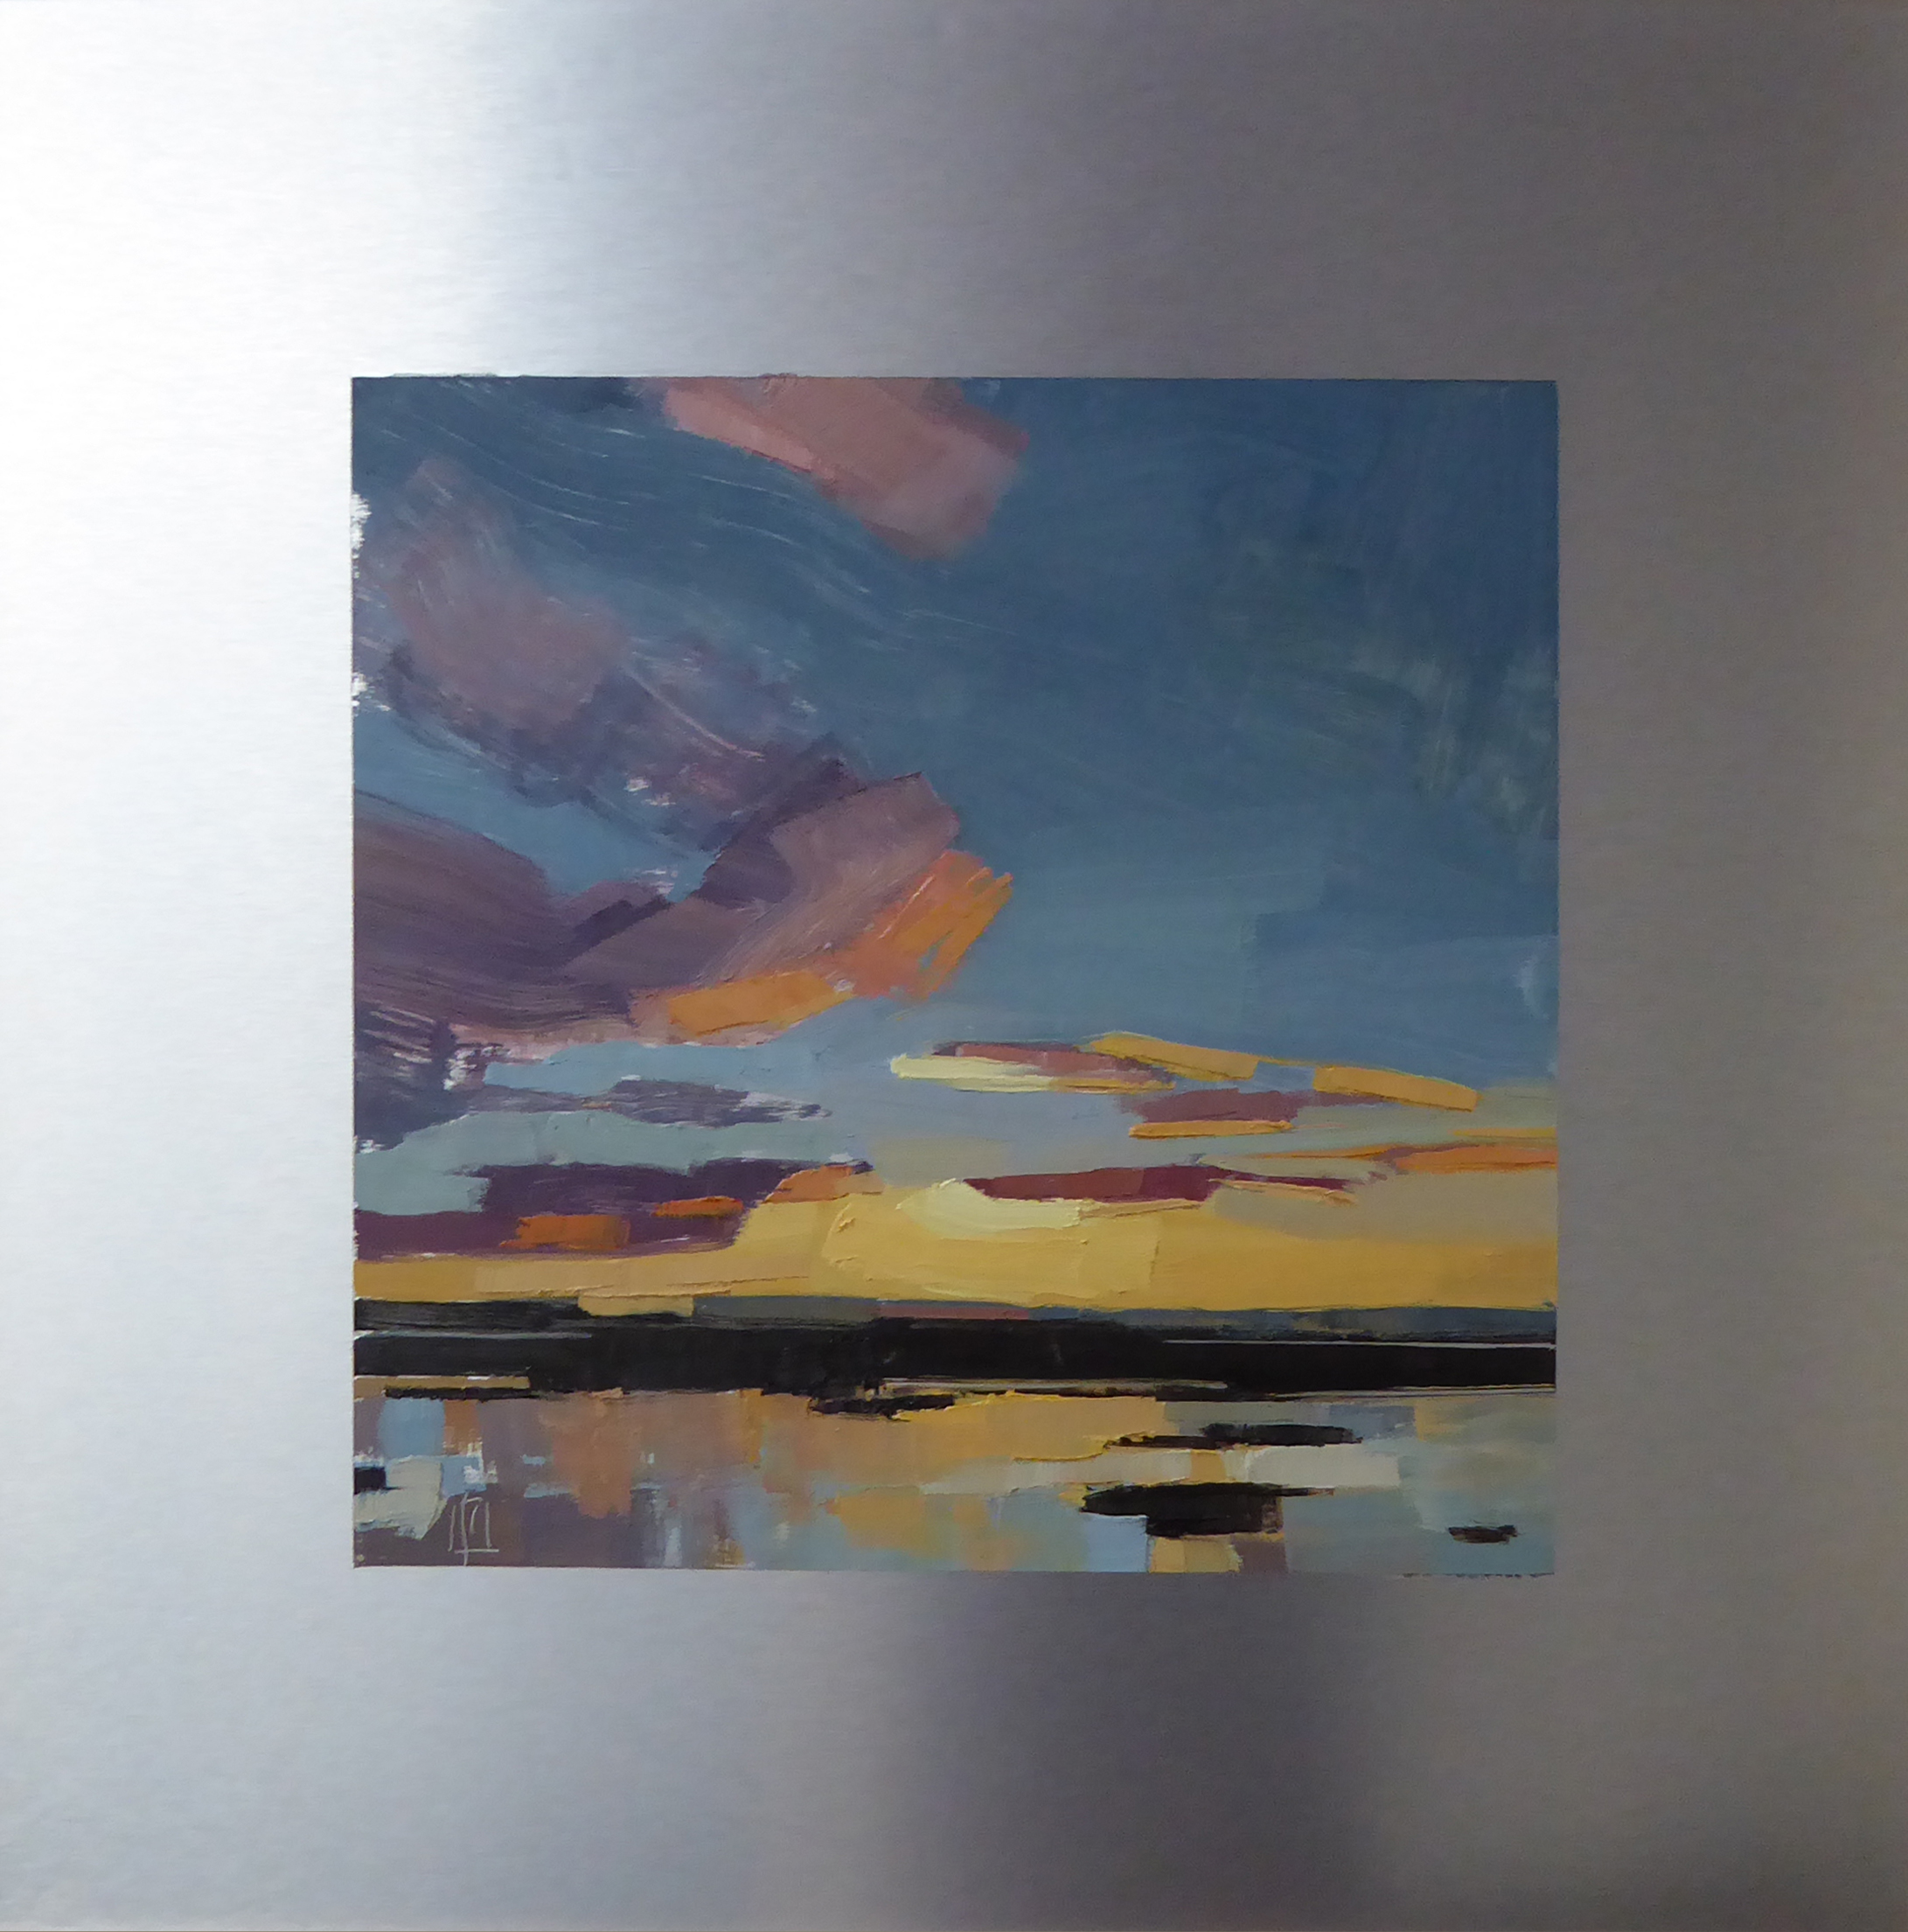   Plum Island, West  12 x 12 on 20 x 20 alum panel   Islesford Artists Gallery   sold   